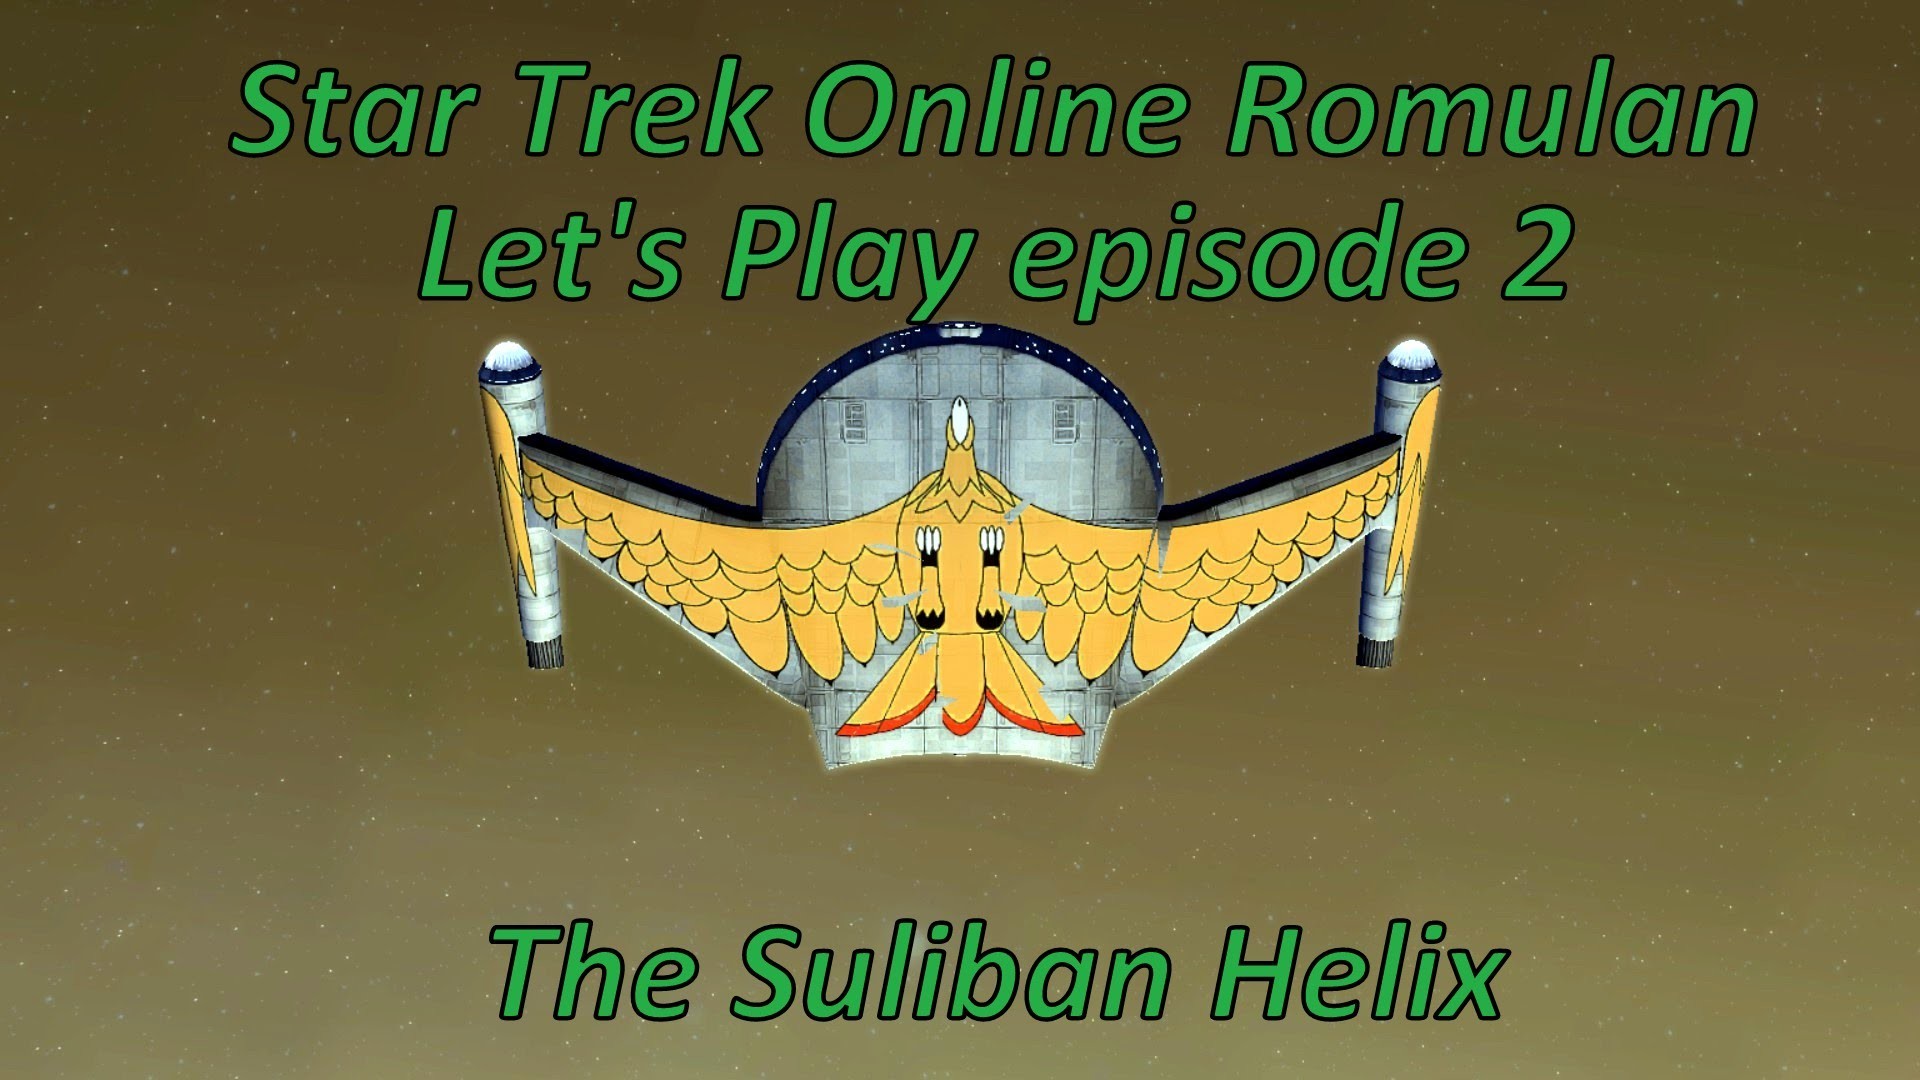 1920x1080 Star Trek Online Romulan Let's Play episode 2 The Suliban Helix